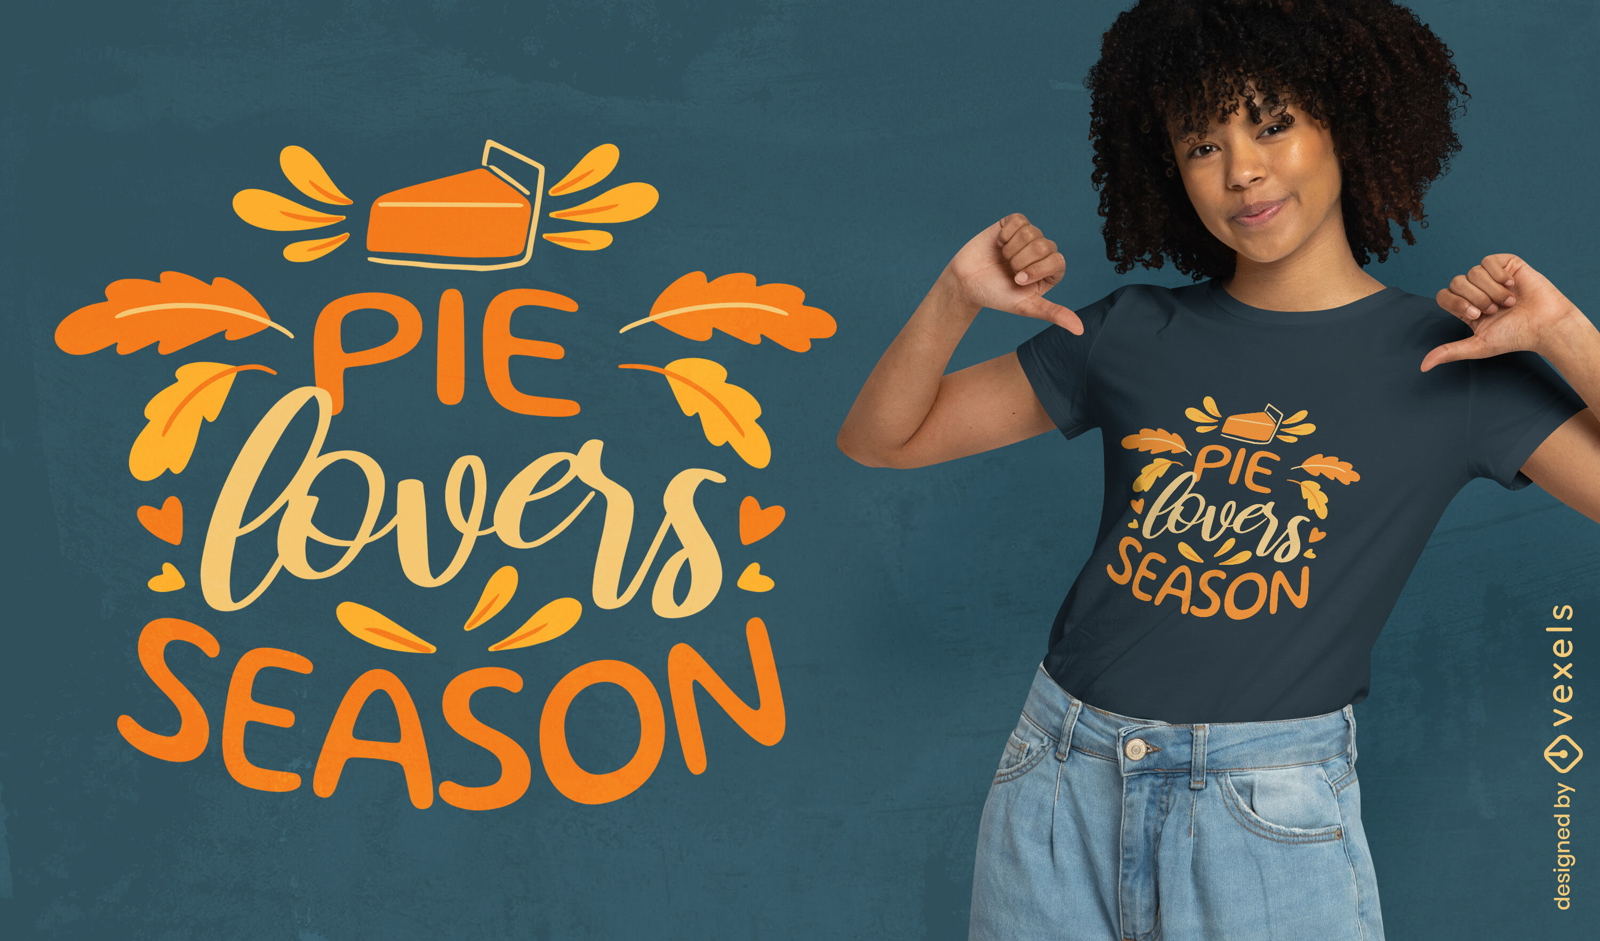 Pie lovers season t-shirt design